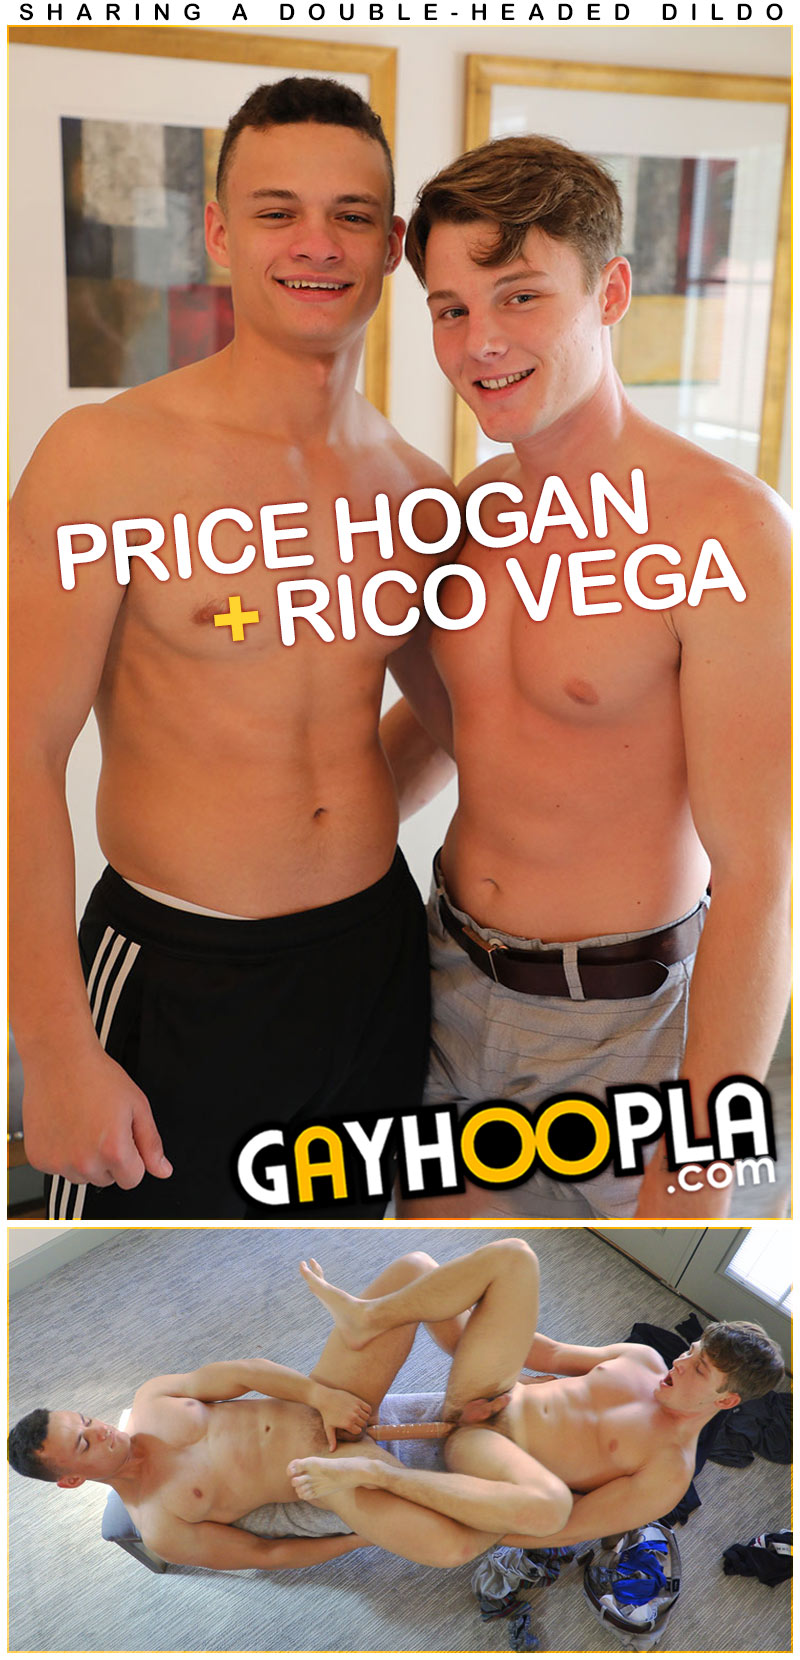 Rico Vega and Price Hogan Share Double-Headed Dildo at GayHoopla